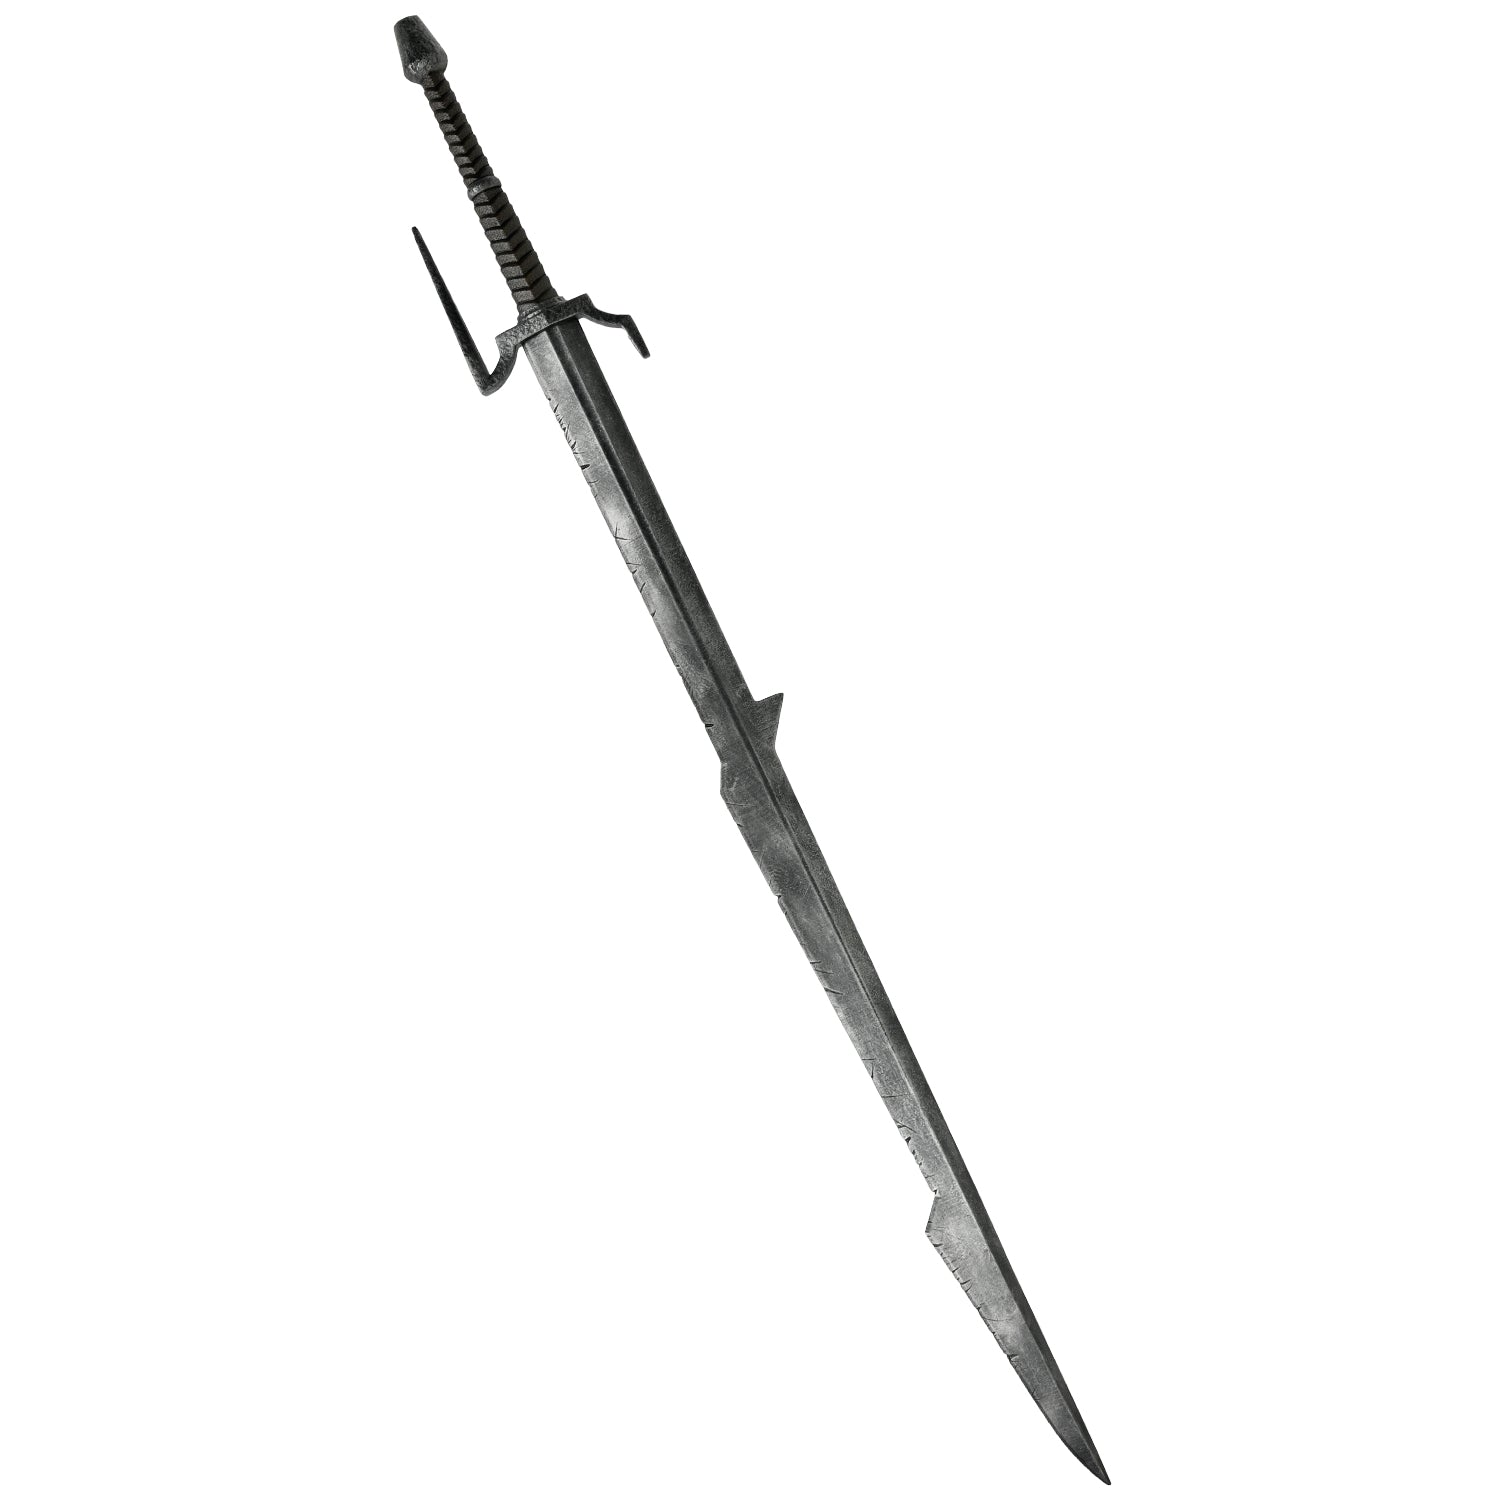 Eredin's Sword - Reforged